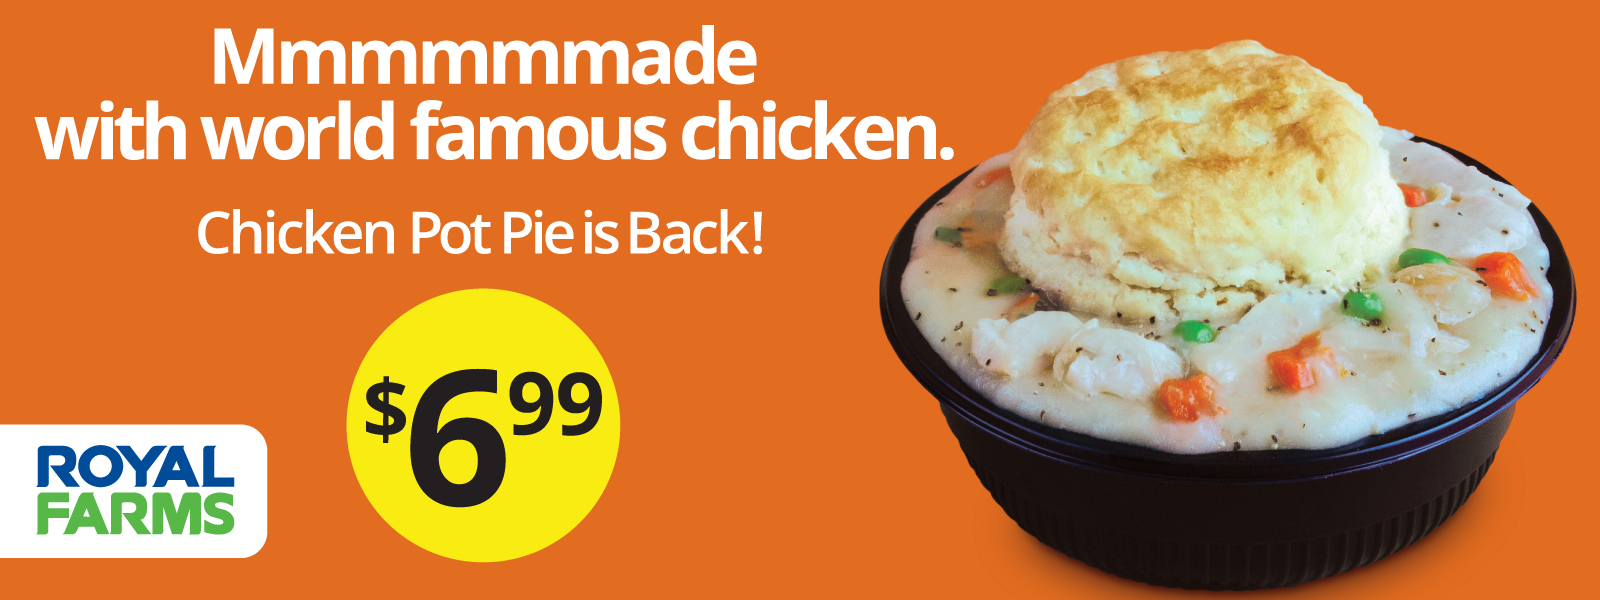 Royal Farms Promo – Chicken Pot Pie is Back